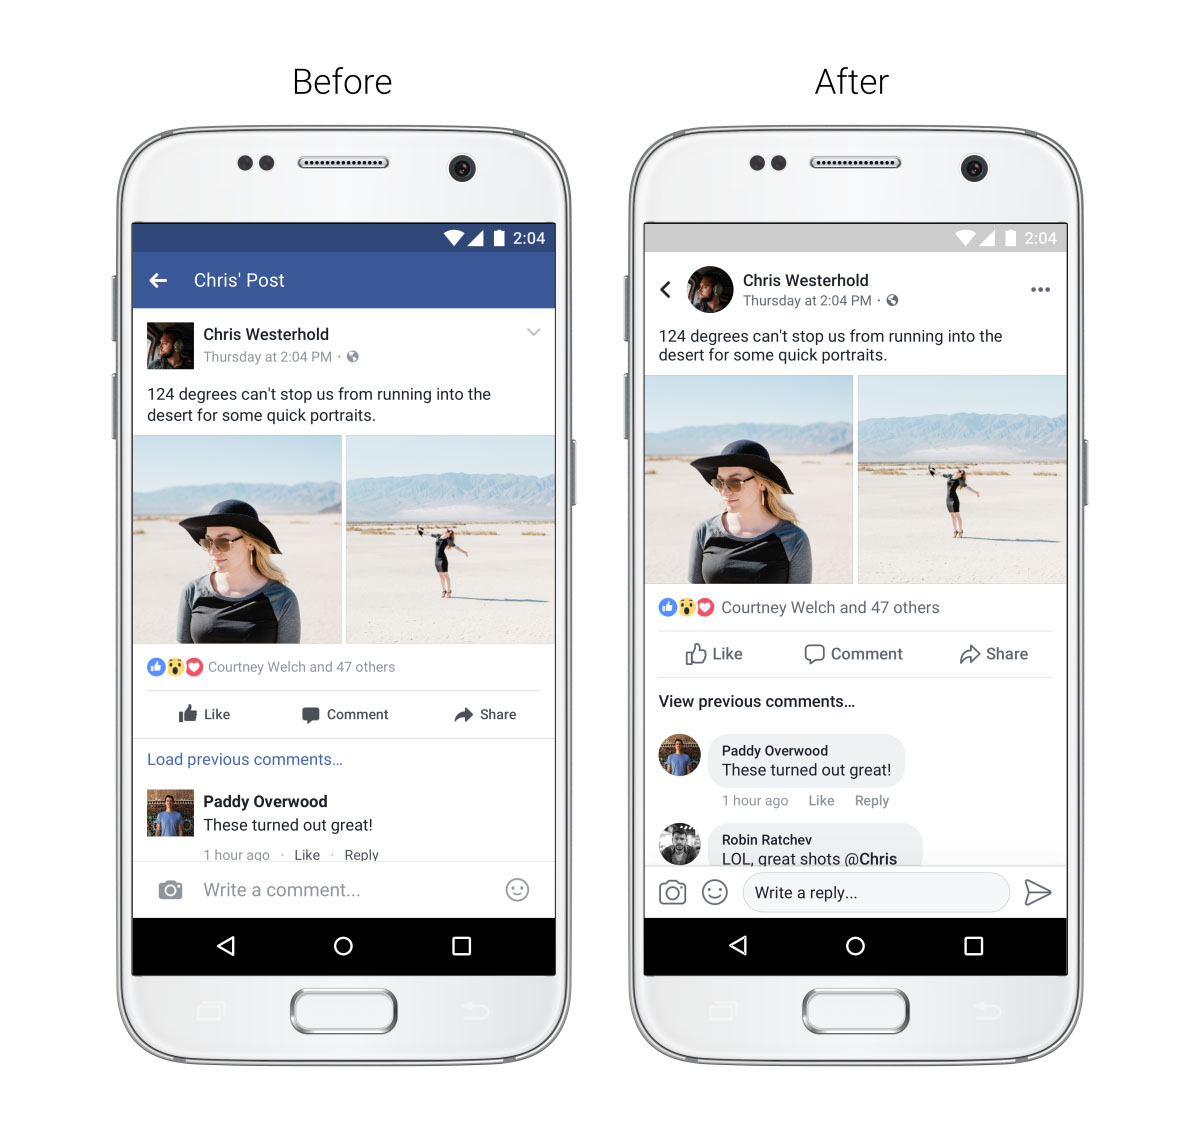 Facebook Announces Improvements to Readability, Conversations, Navigation